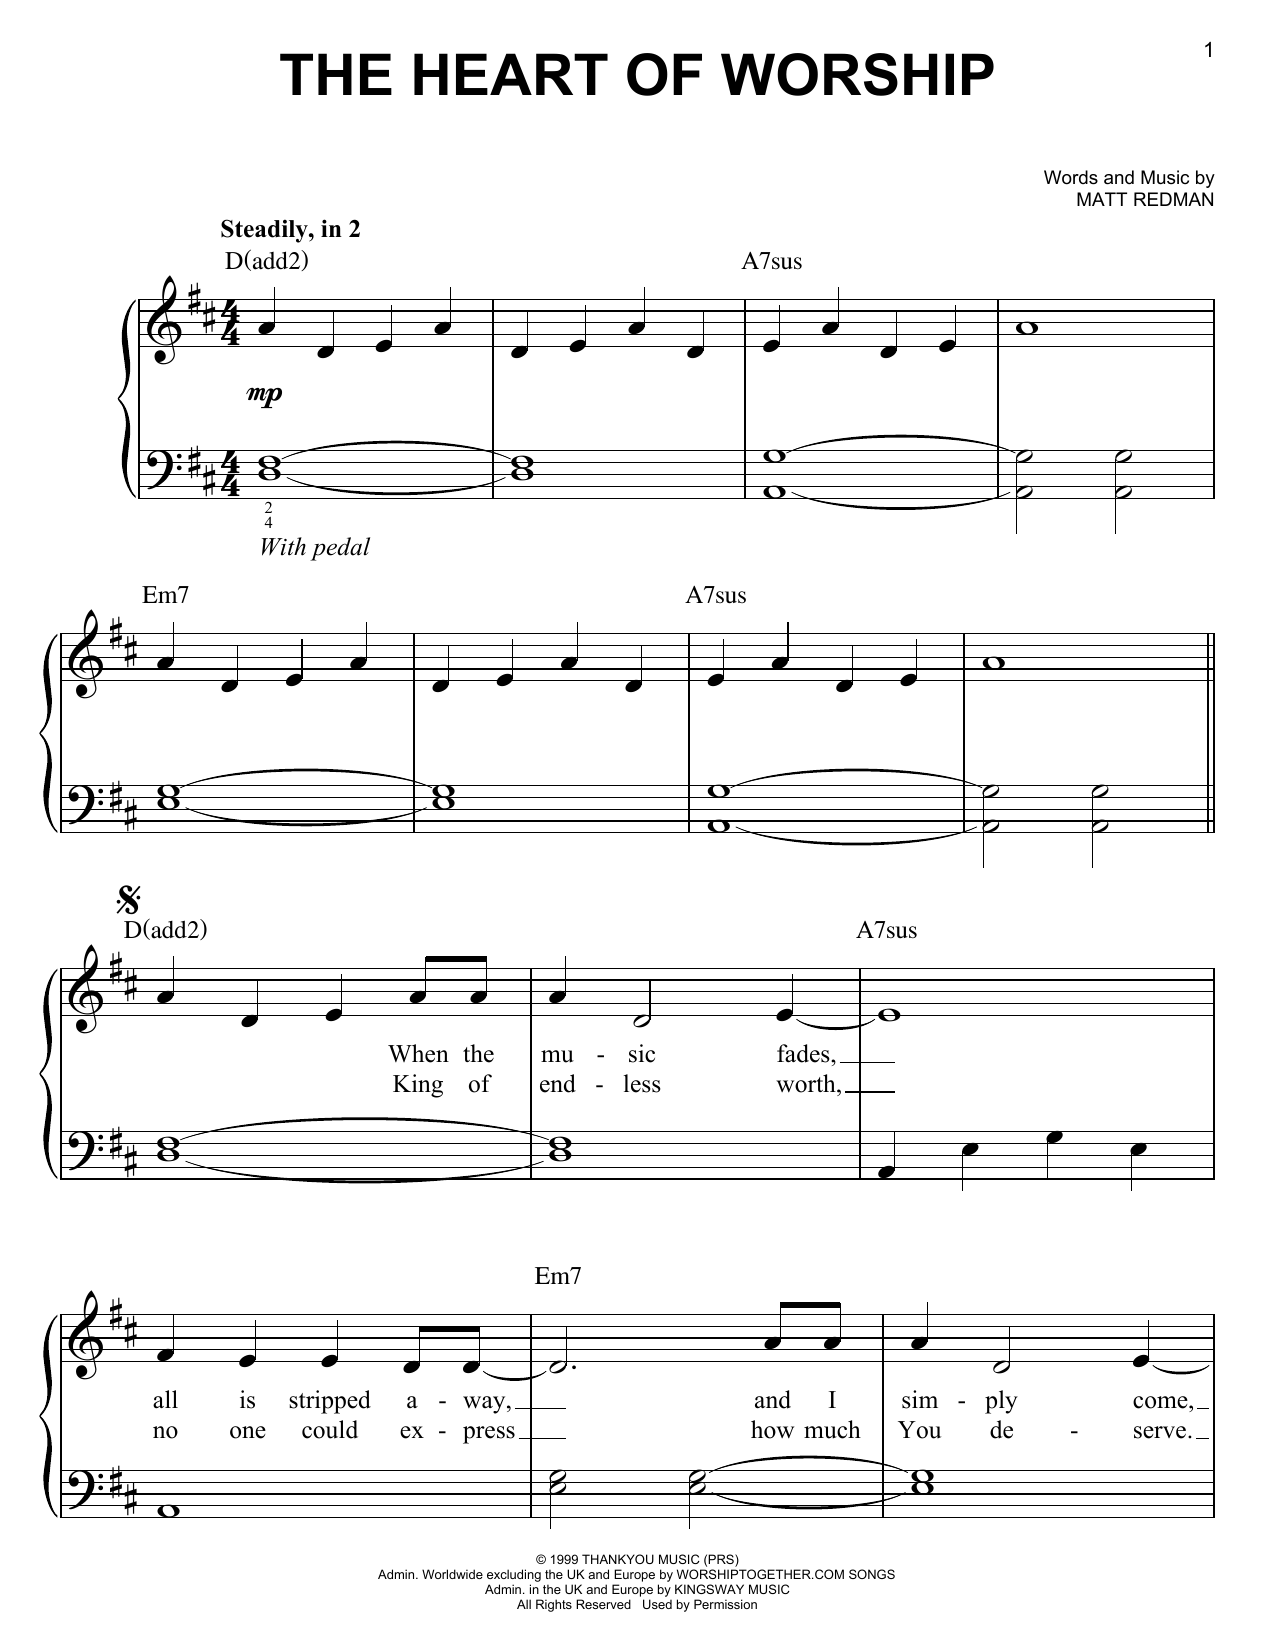 Matt Redman The Heart Of Worship Sheet Music Notes & Chords for Ukulele - Download or Print PDF